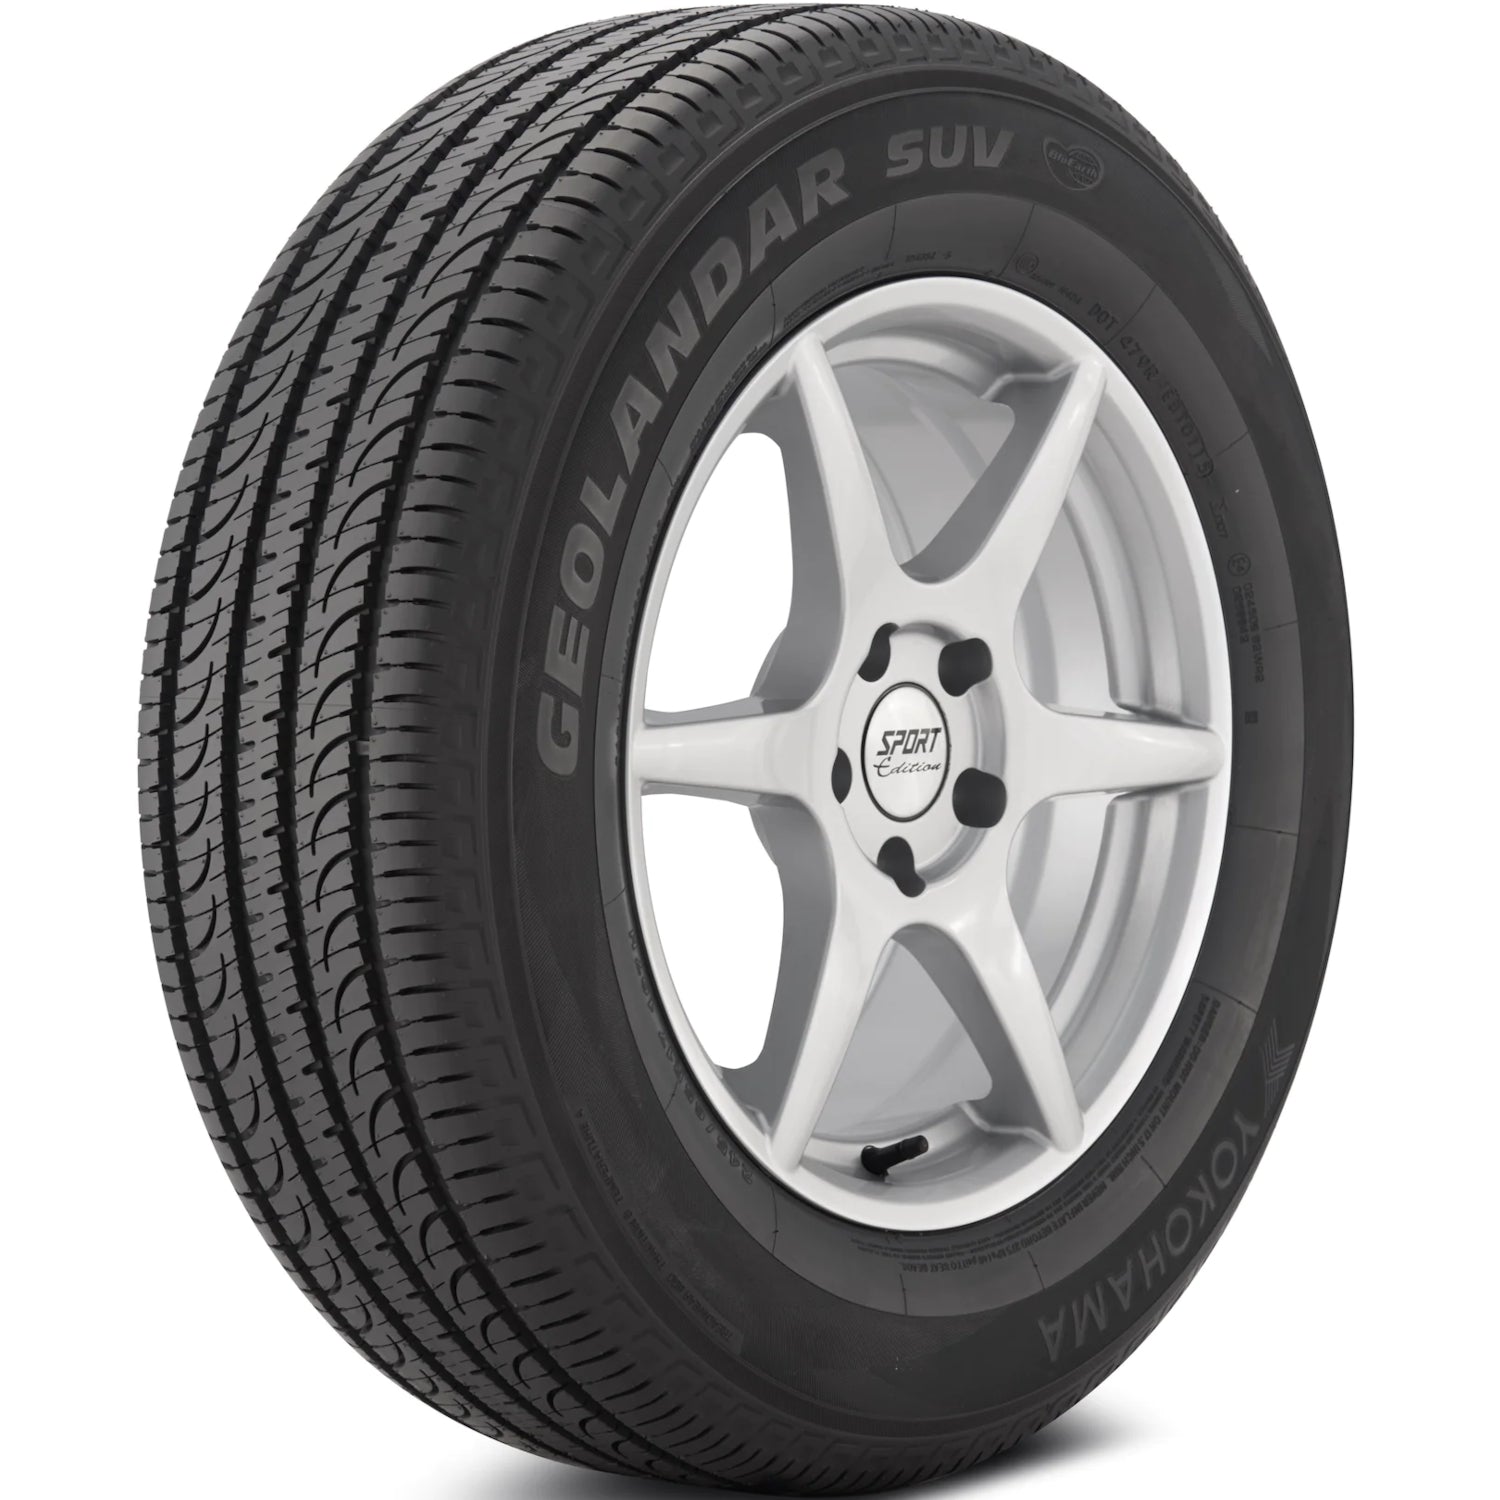 YOKOHAMA GEOLANDAR G055 225/55R18 (27.8X9.1R 18) Tires